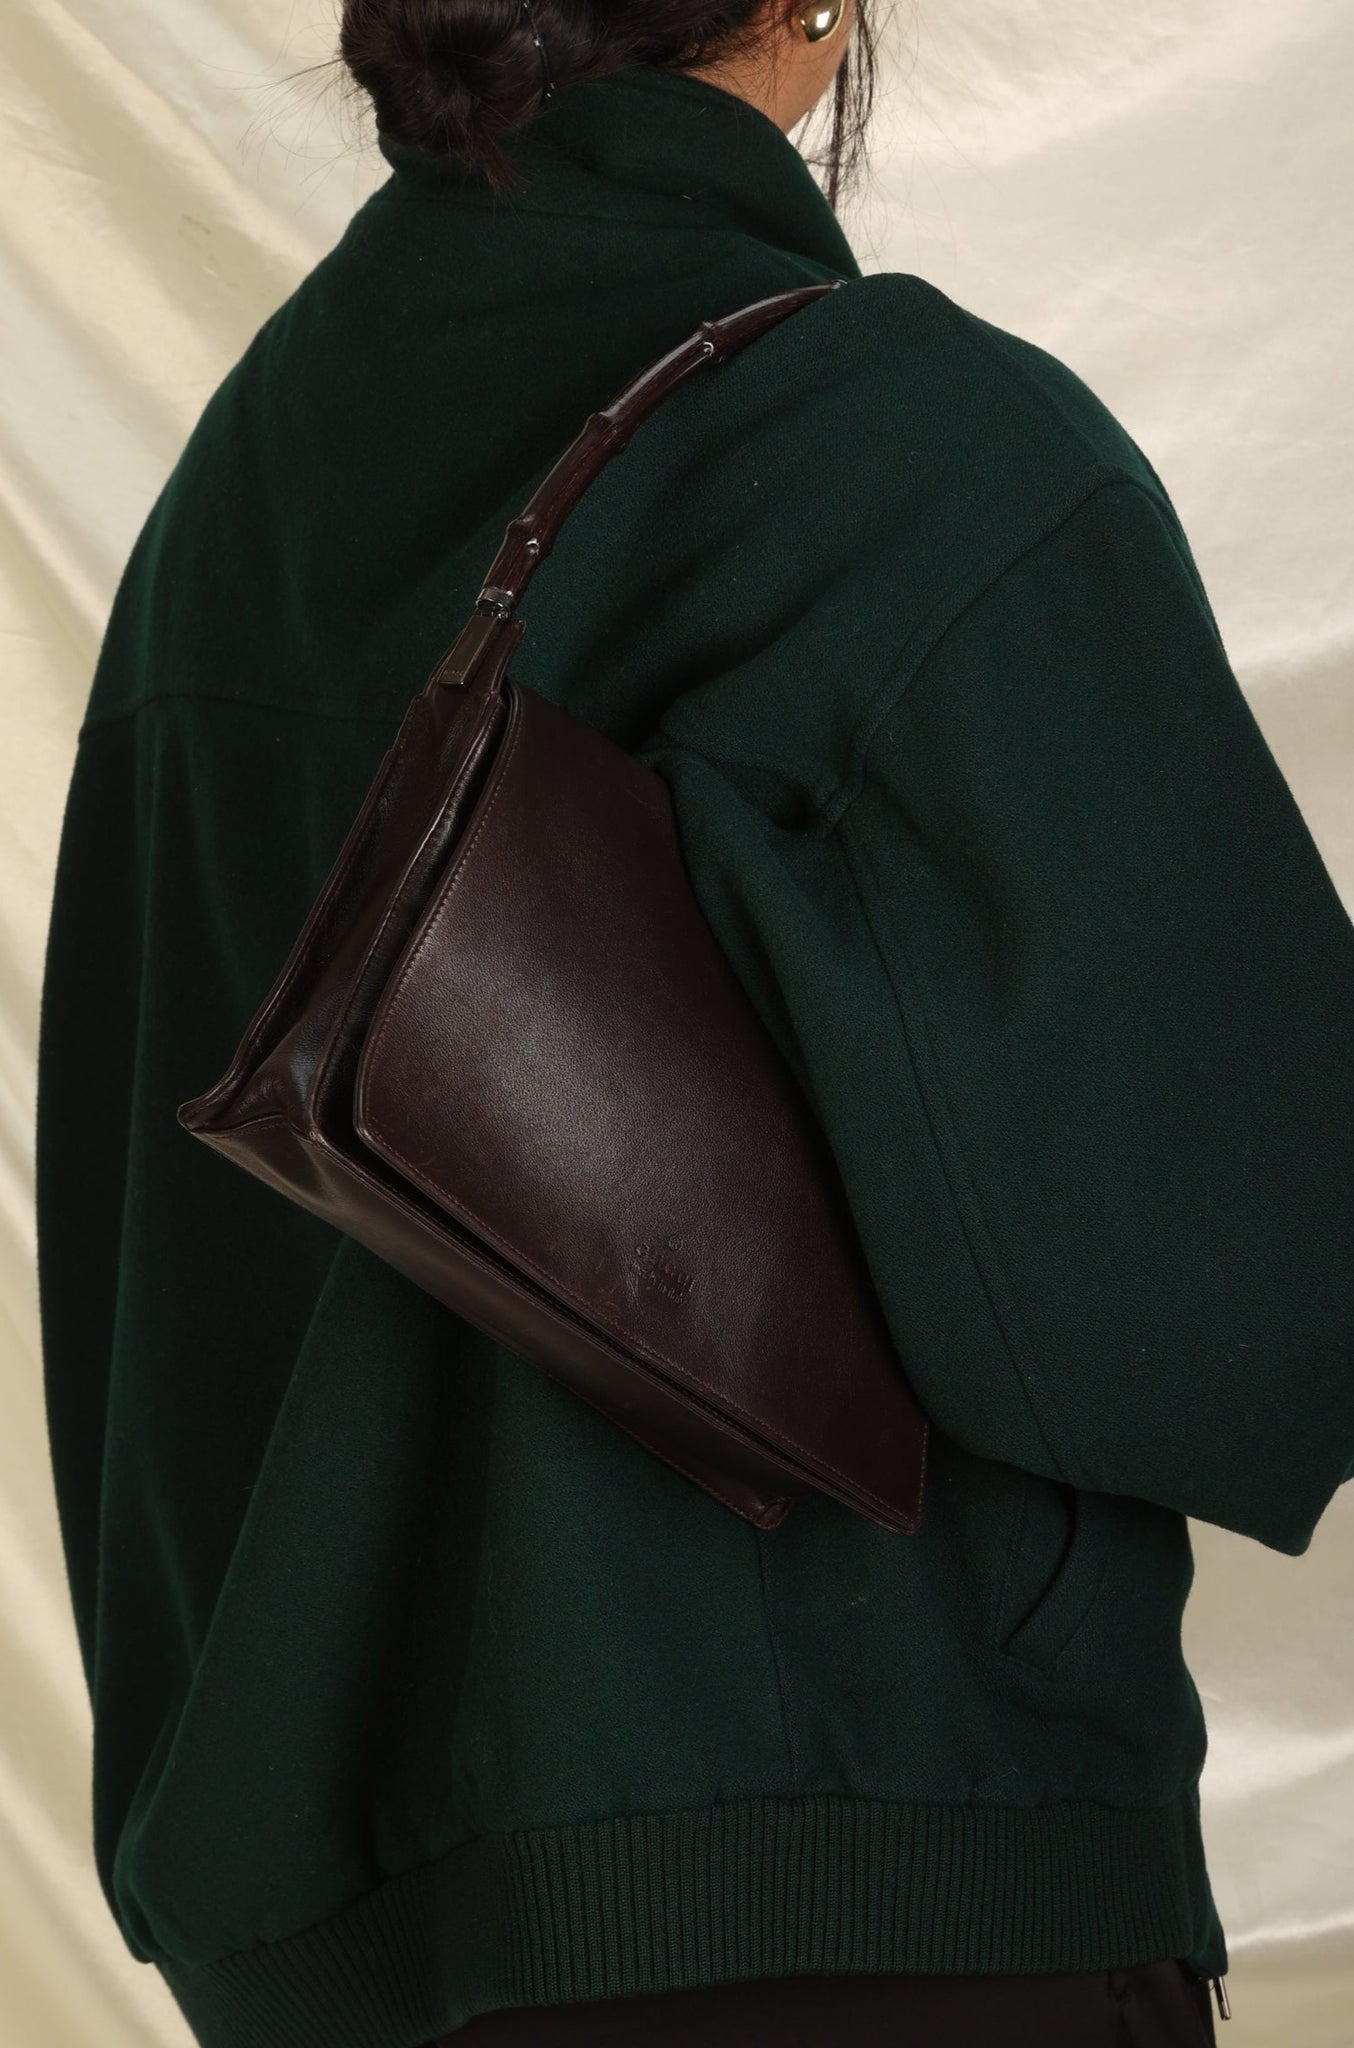 Rare Gucci Leather Bamboo Flap Bag